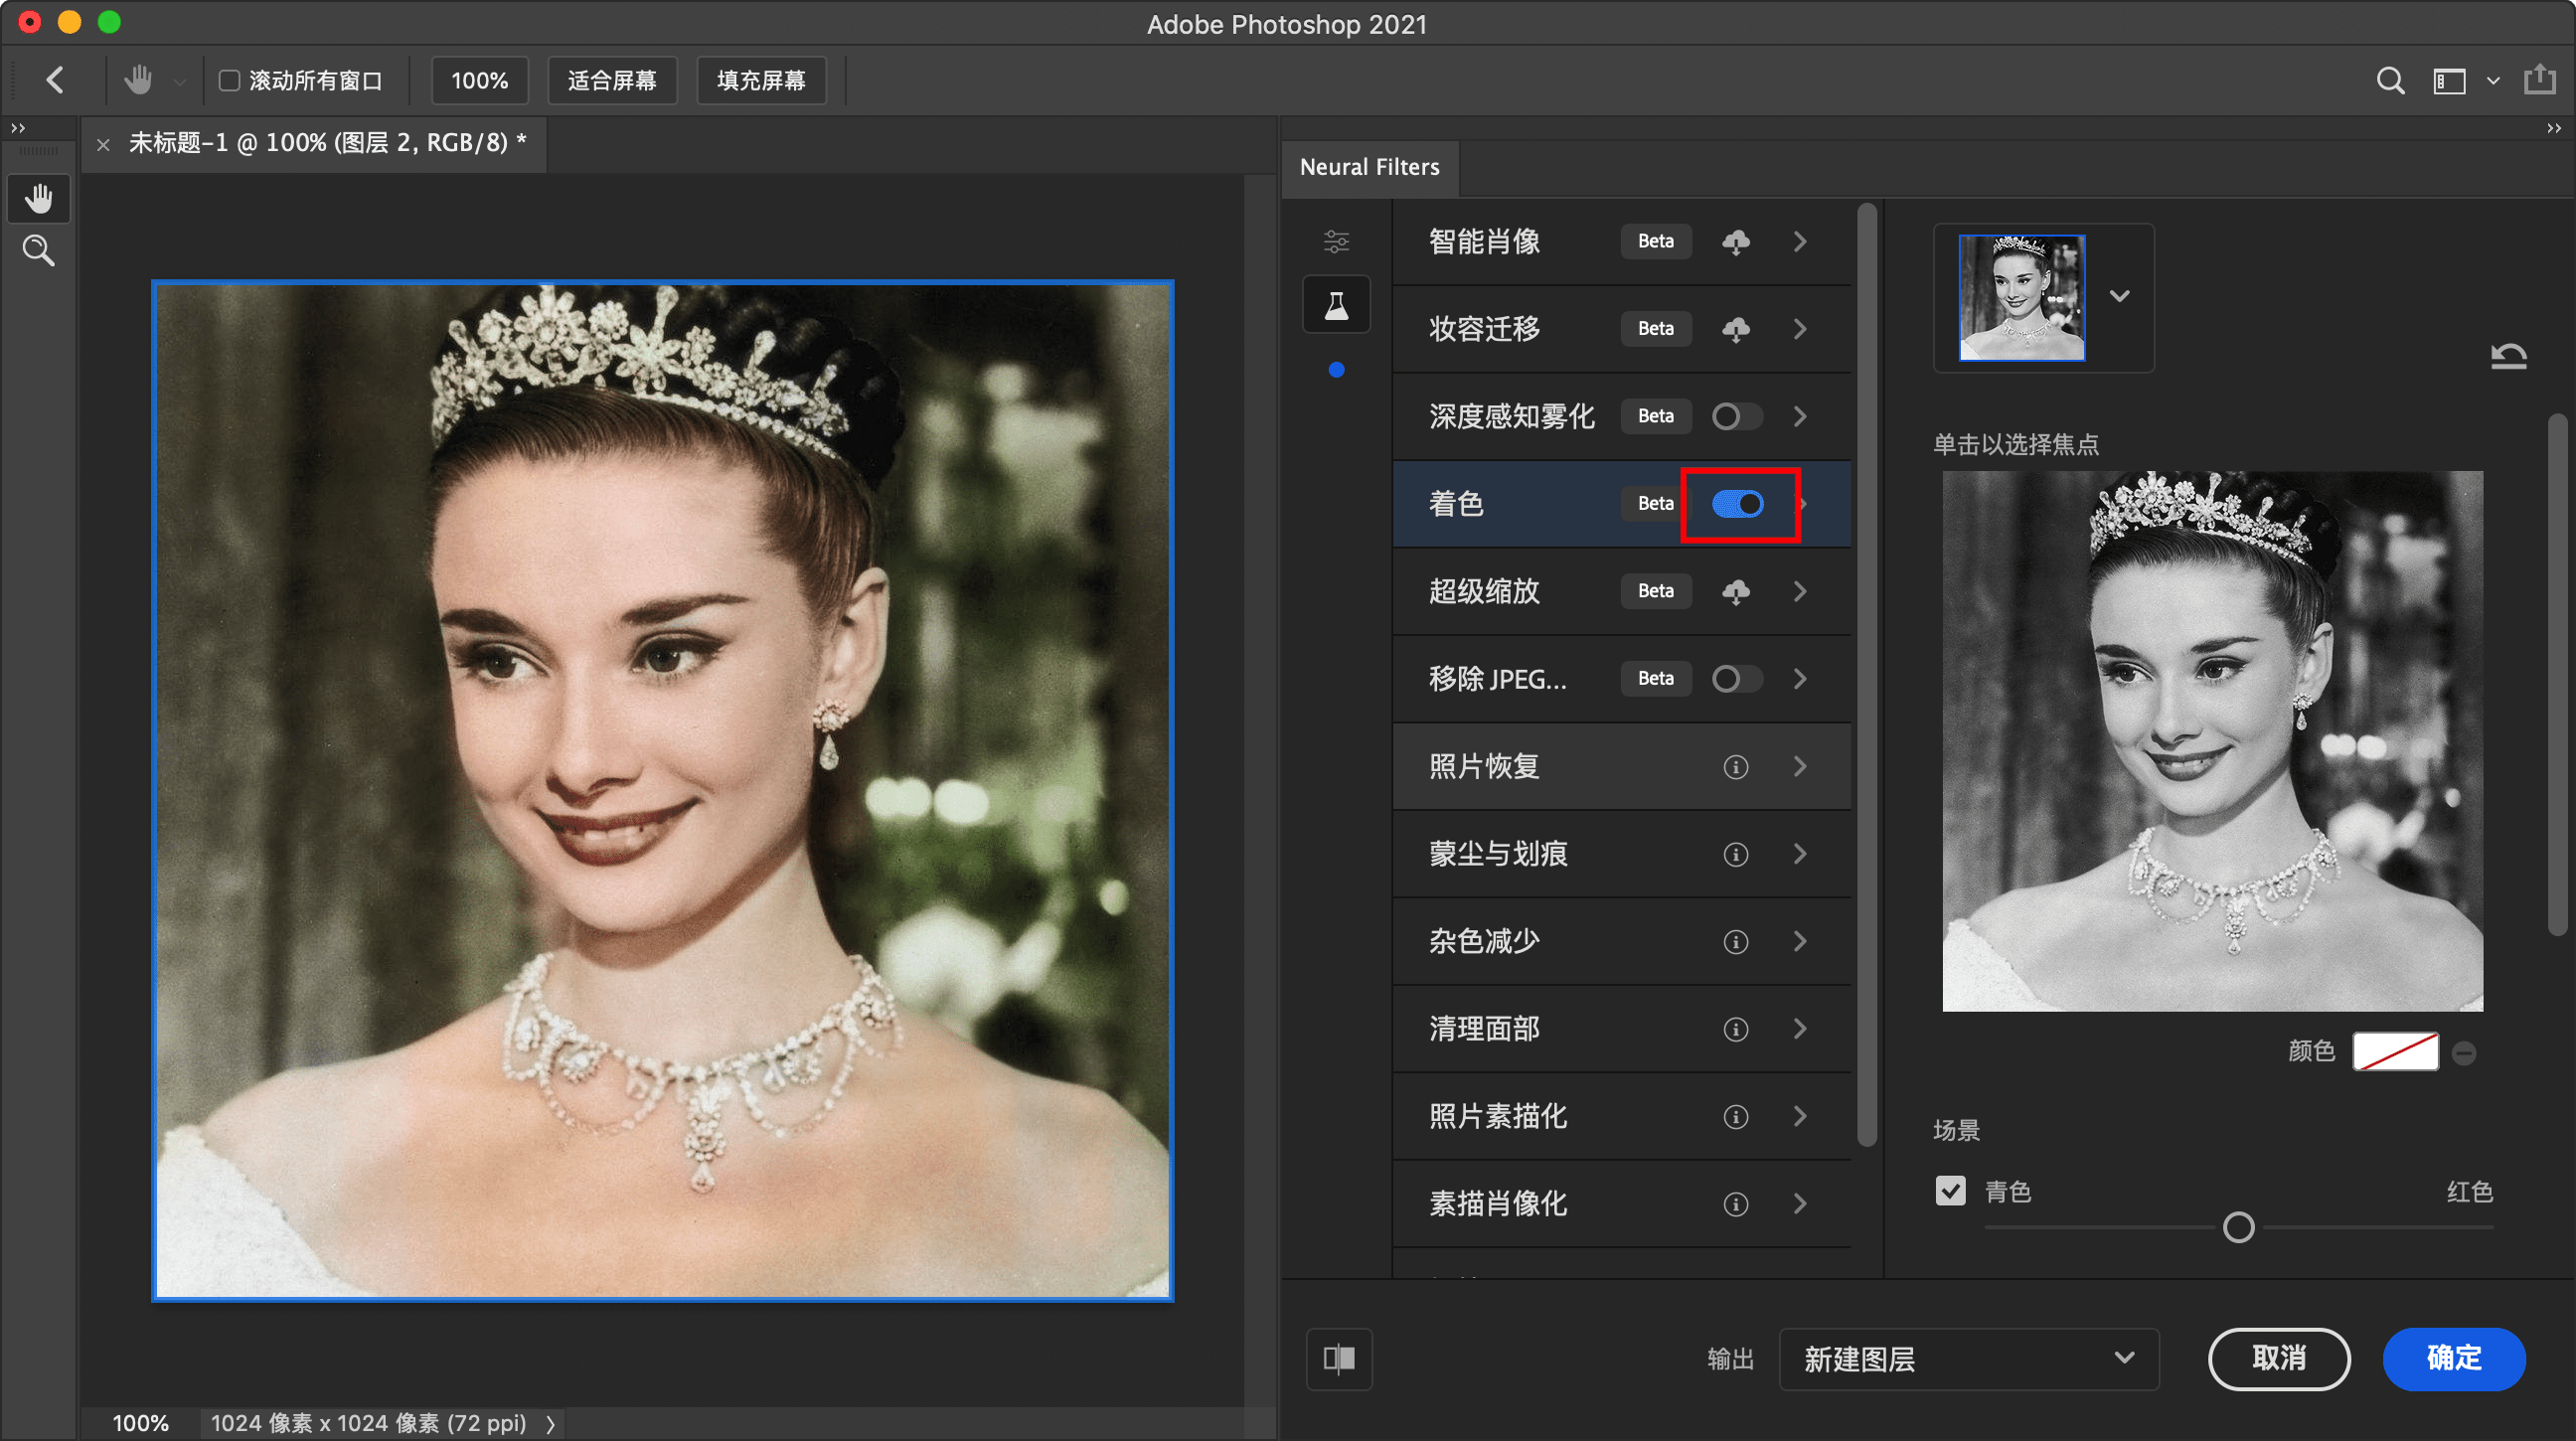 PhotoShop 2021 mac版 自动上色功能 - 苹果软件盒子